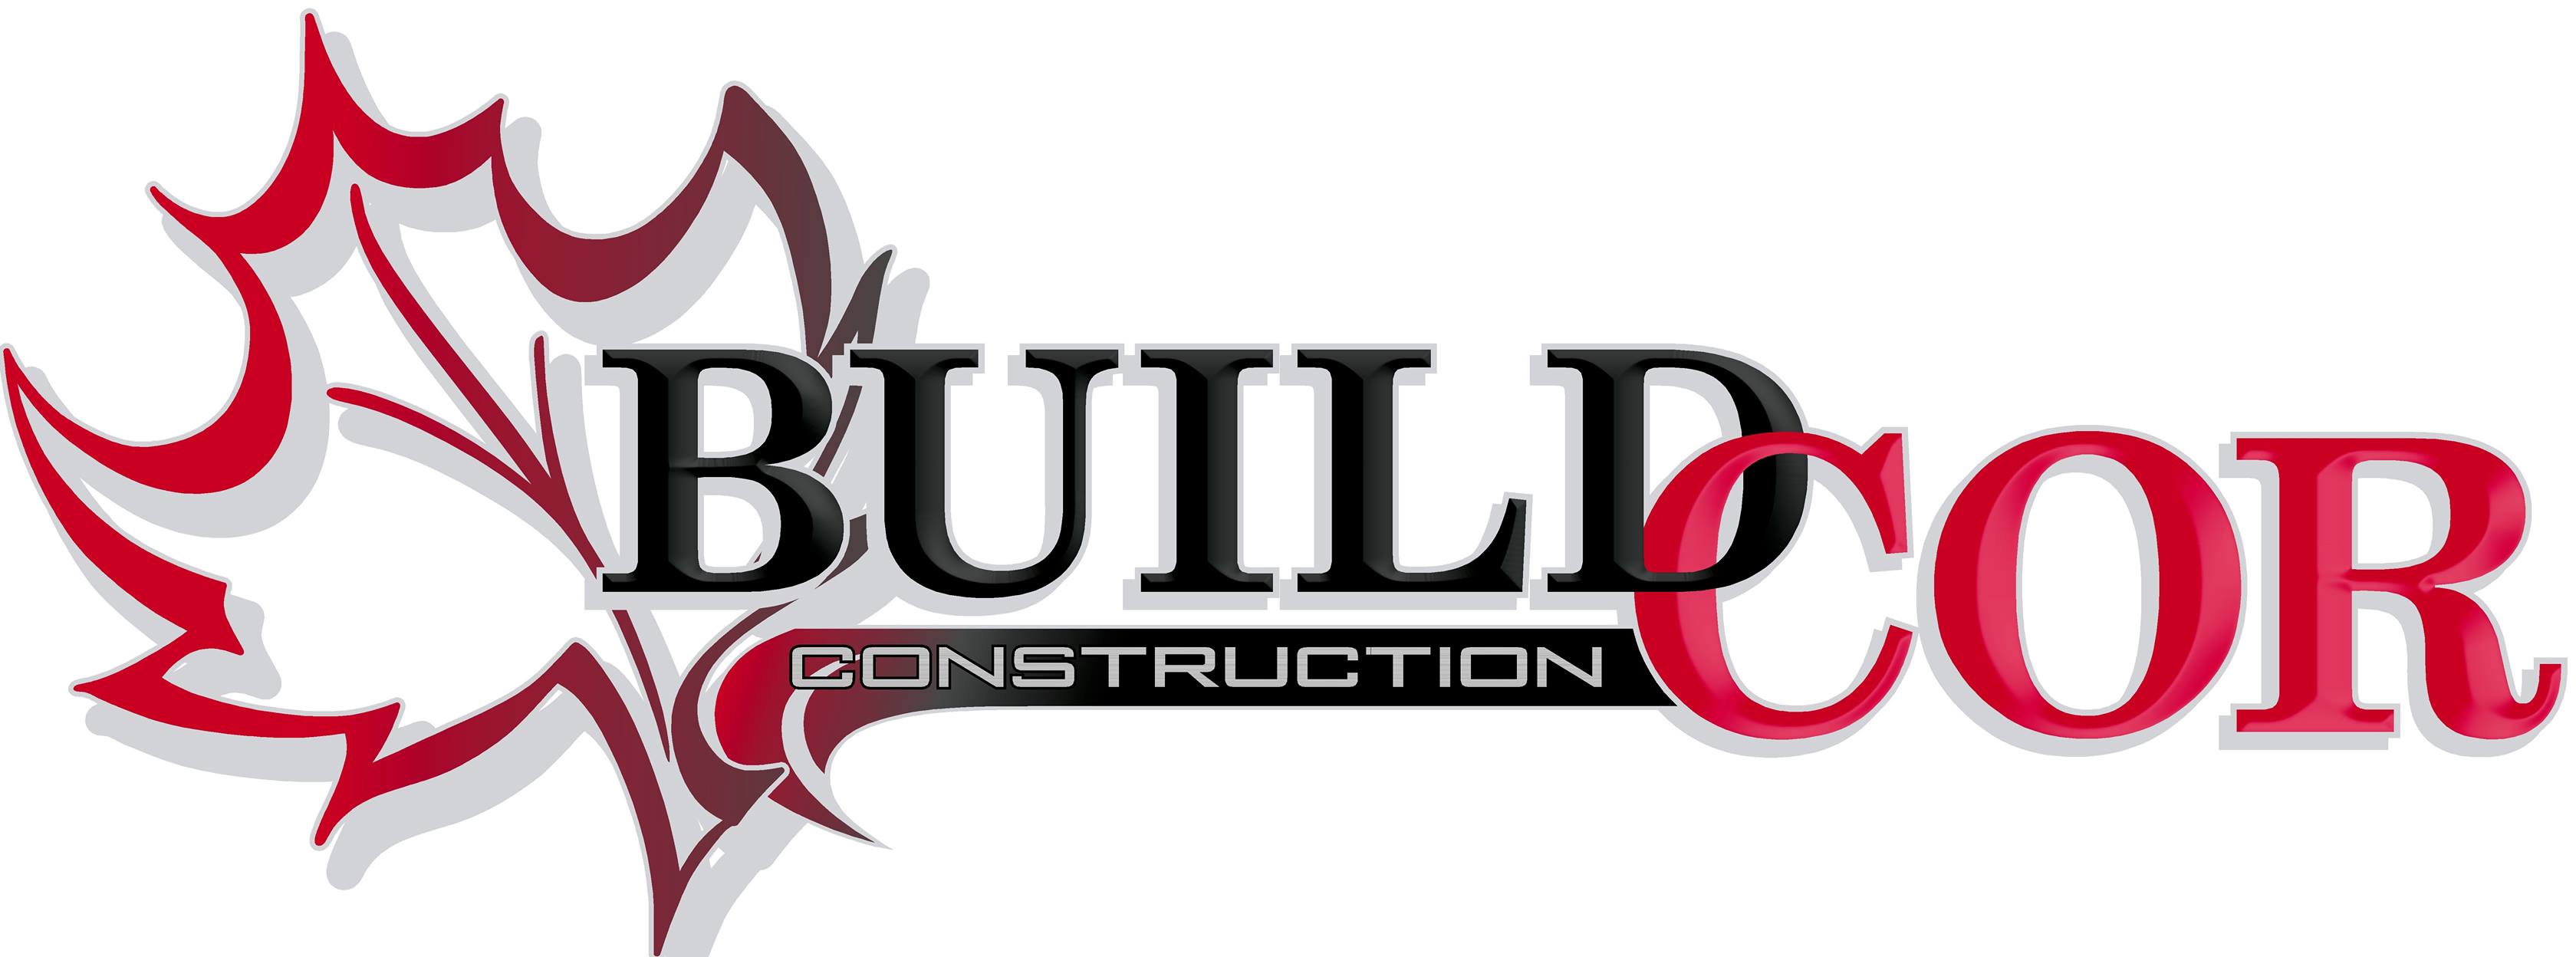 Buildcor Construction